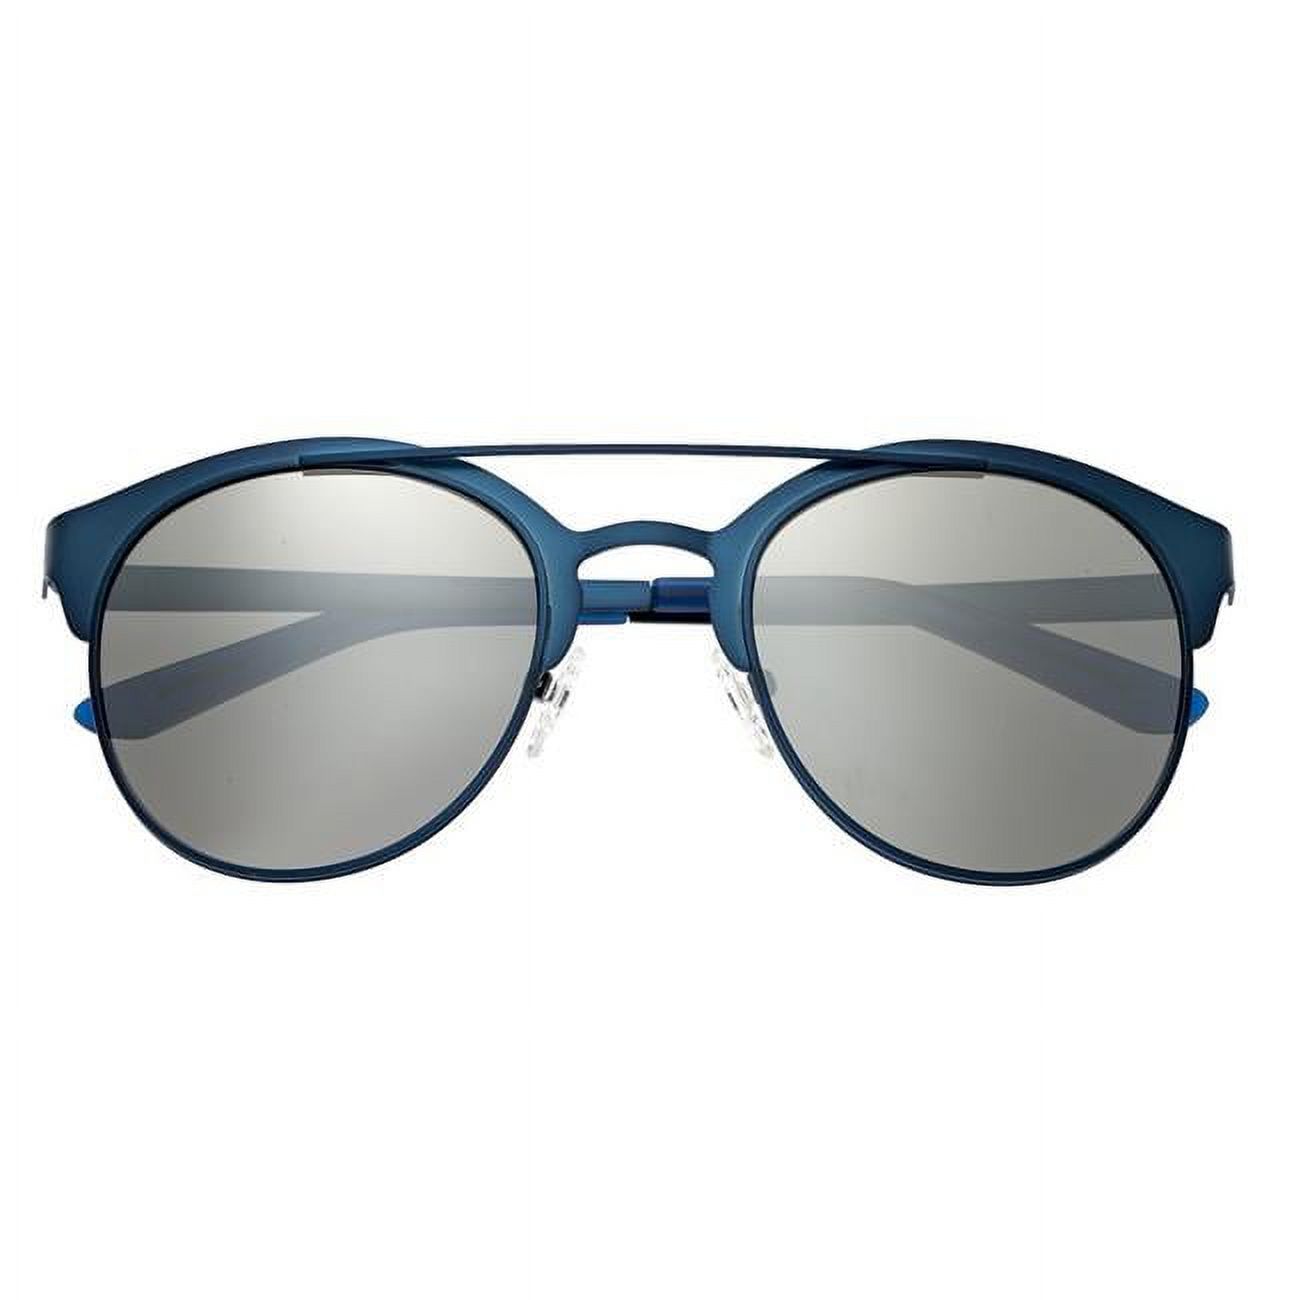 Breed Sunglasses BSG036BL Phoenix Sunglasses - Polarized Carbon Titanium - image 1 of 6